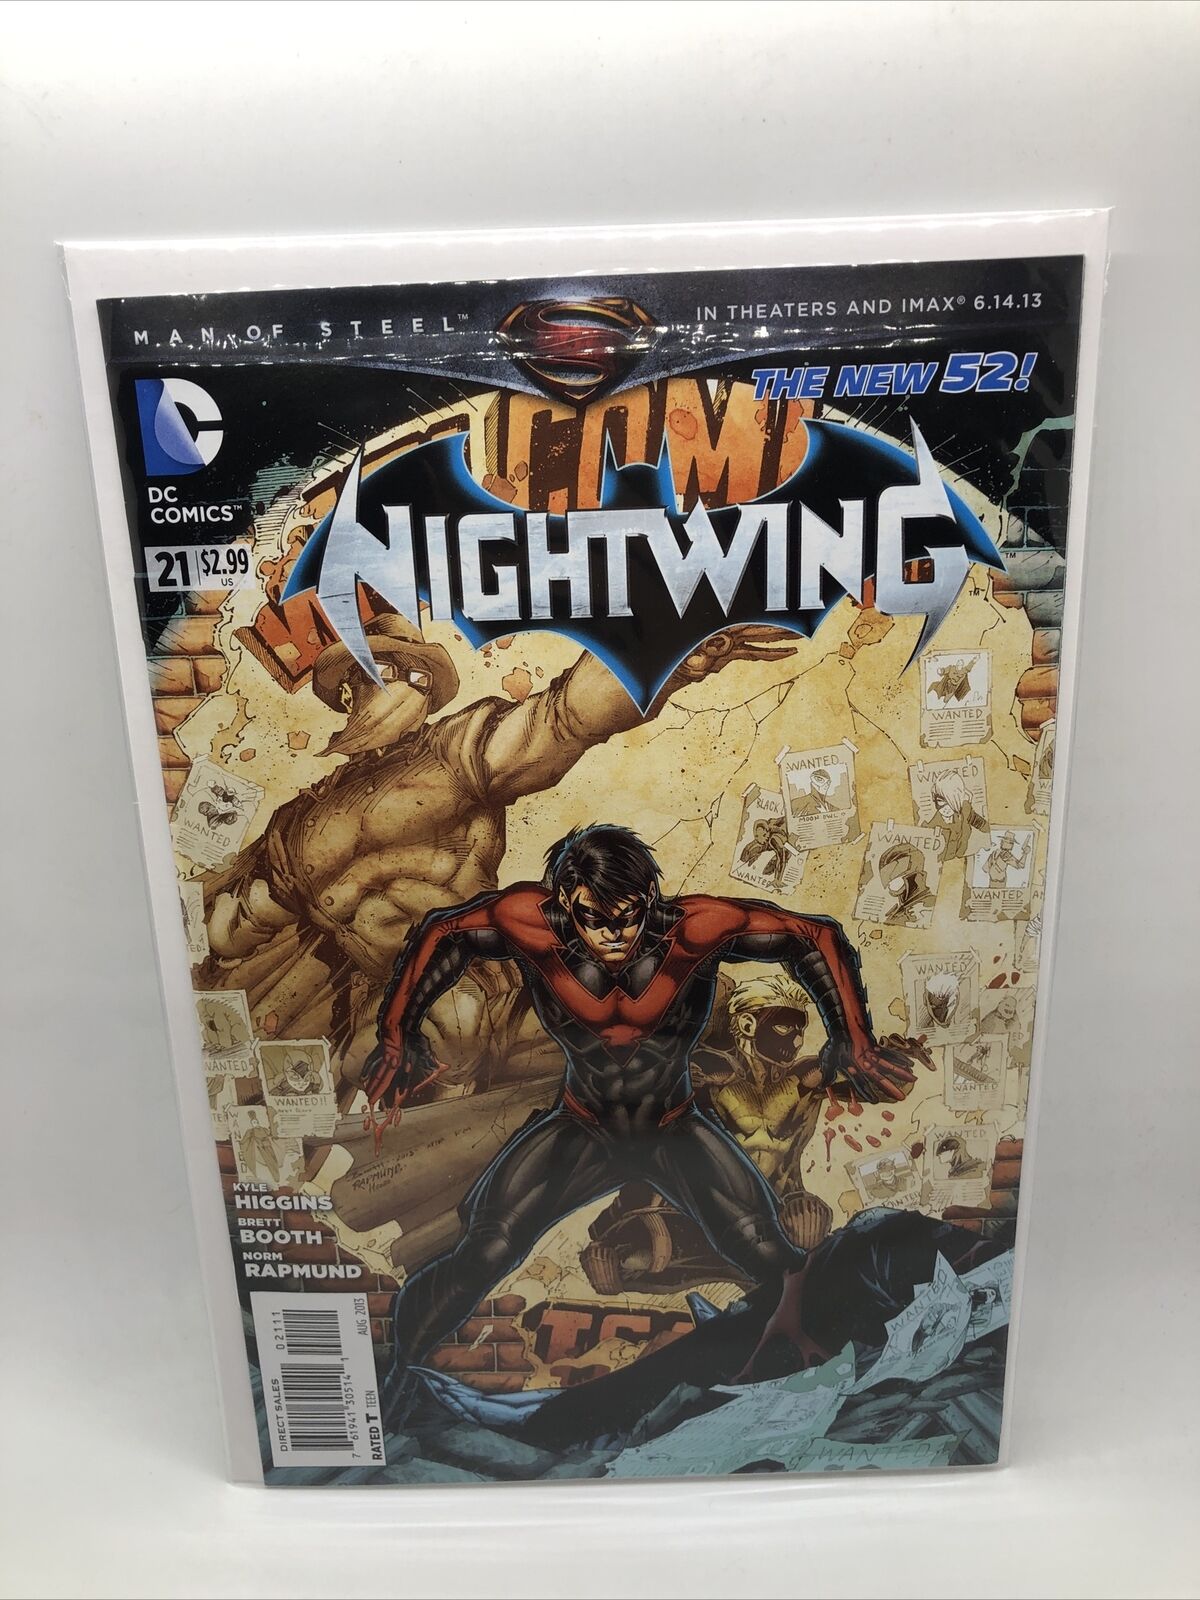 Nightwing #21 (DC Comics, 2013)